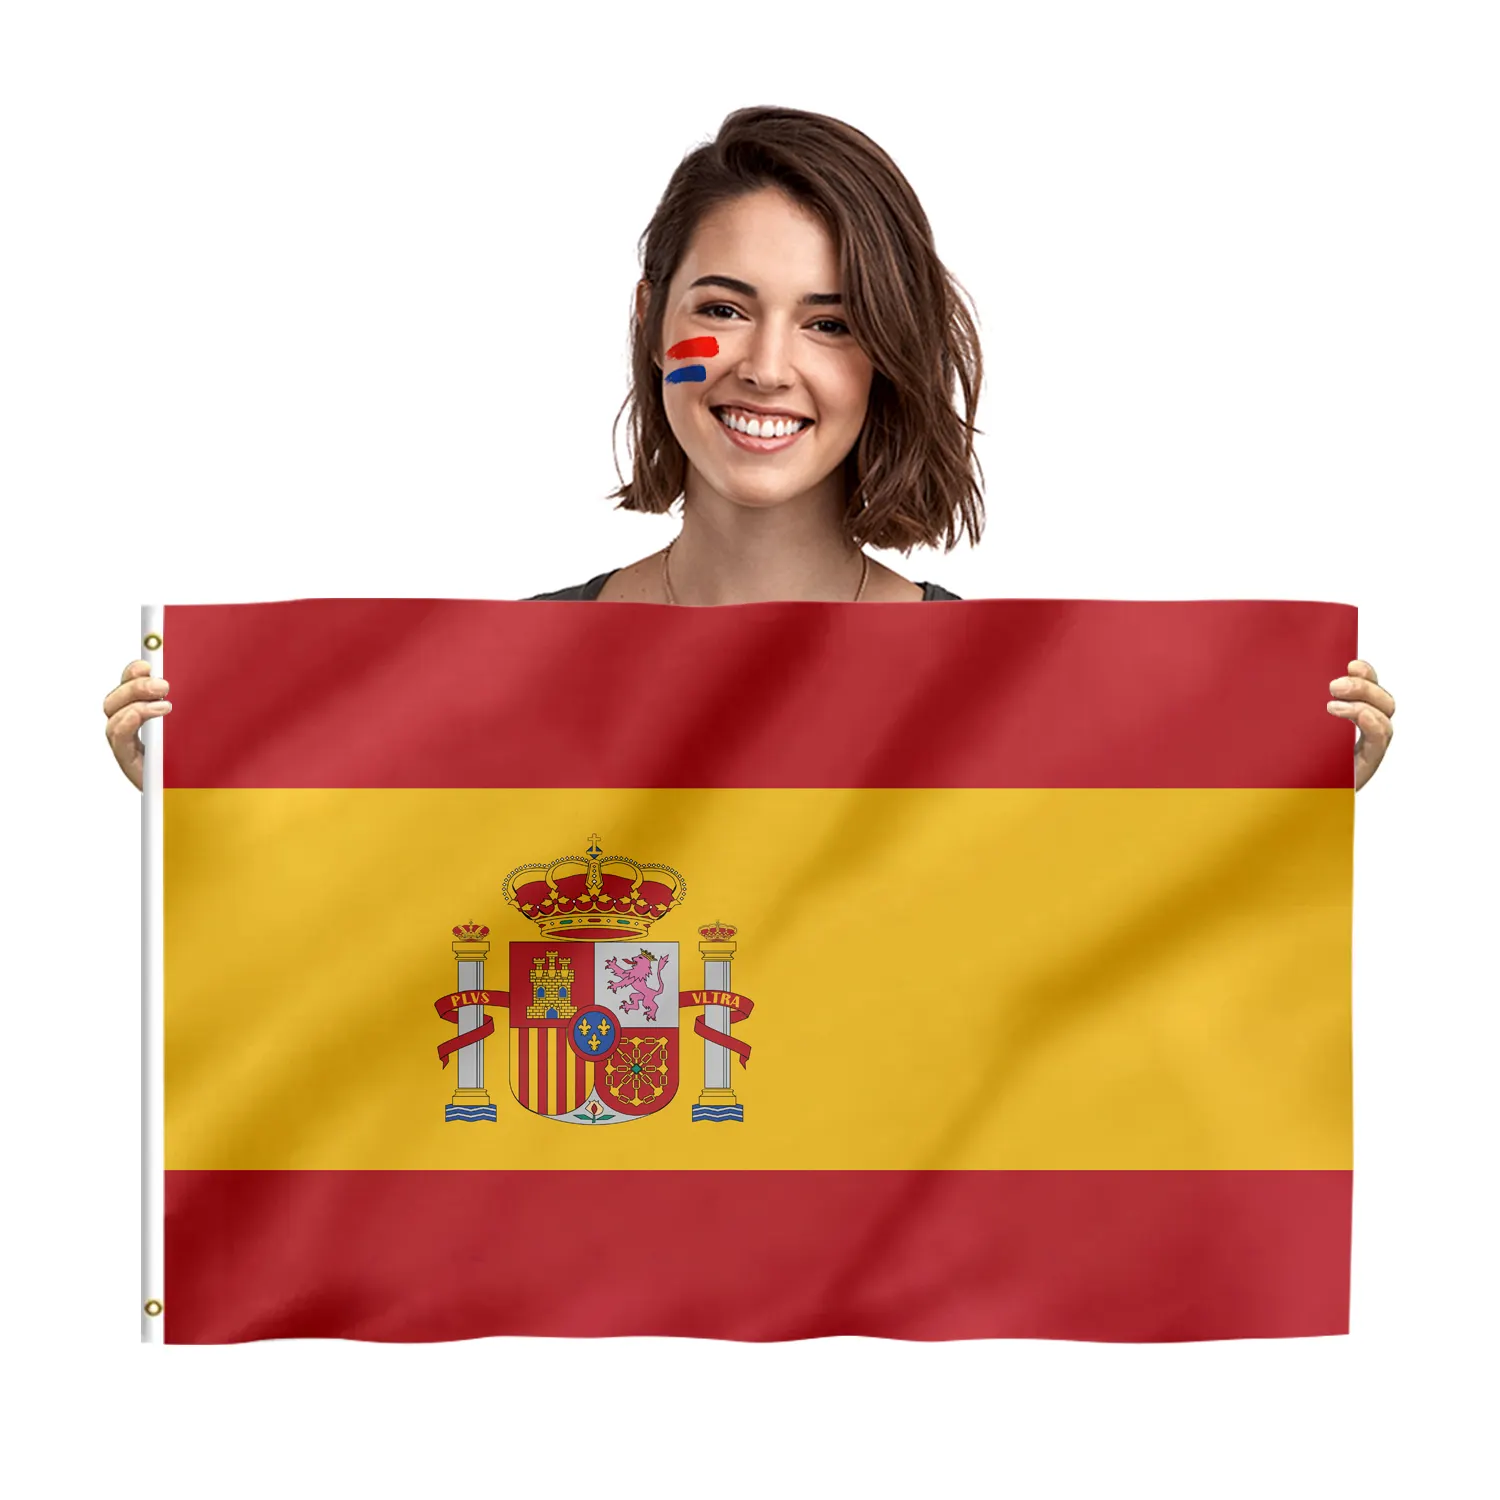 Produto promocional alta qualidade e barato atacado resistente ao calor 3x5 pés 100% poliéster bandeira espanhola personalizada